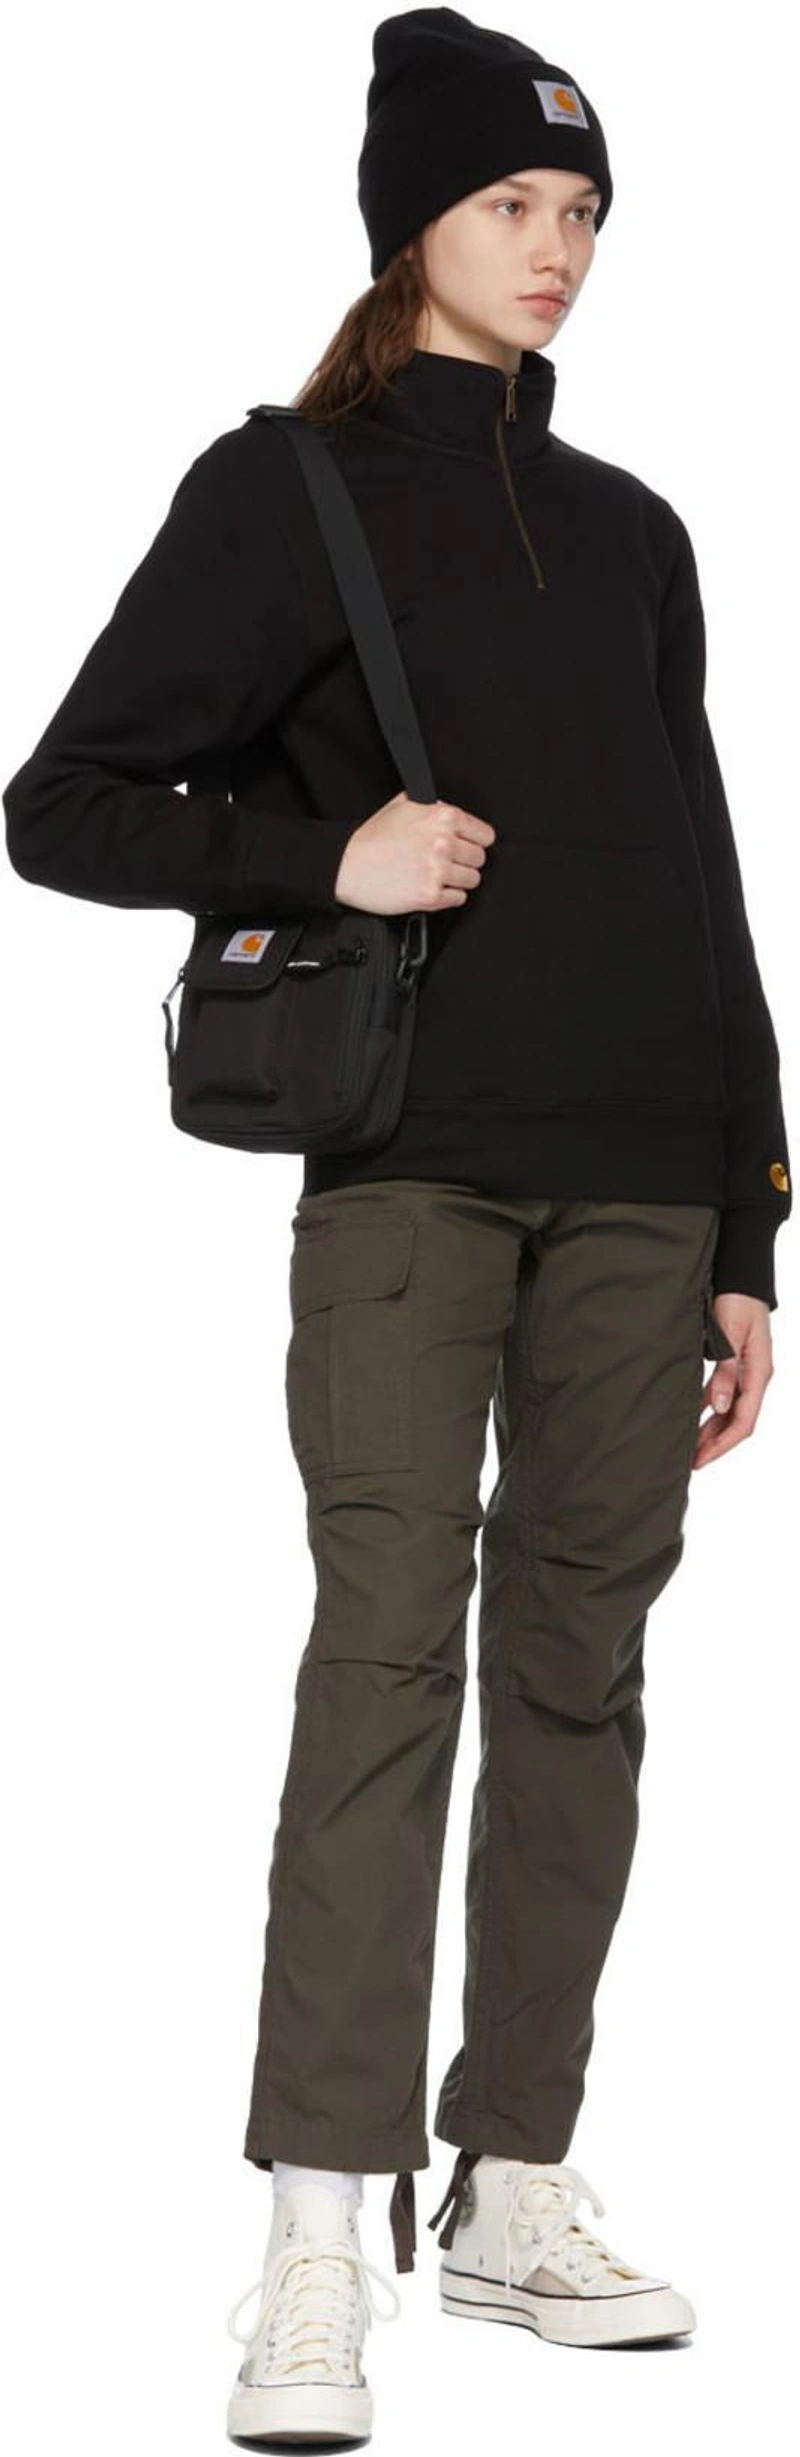 SSENSE's Post | Wearing: Carhartt Khaki Cymbal Trousers In Cypress Rin; Carhartt Black Chase Sweatshirt In Black/gold; Carhartt Black Small Essentials Bag